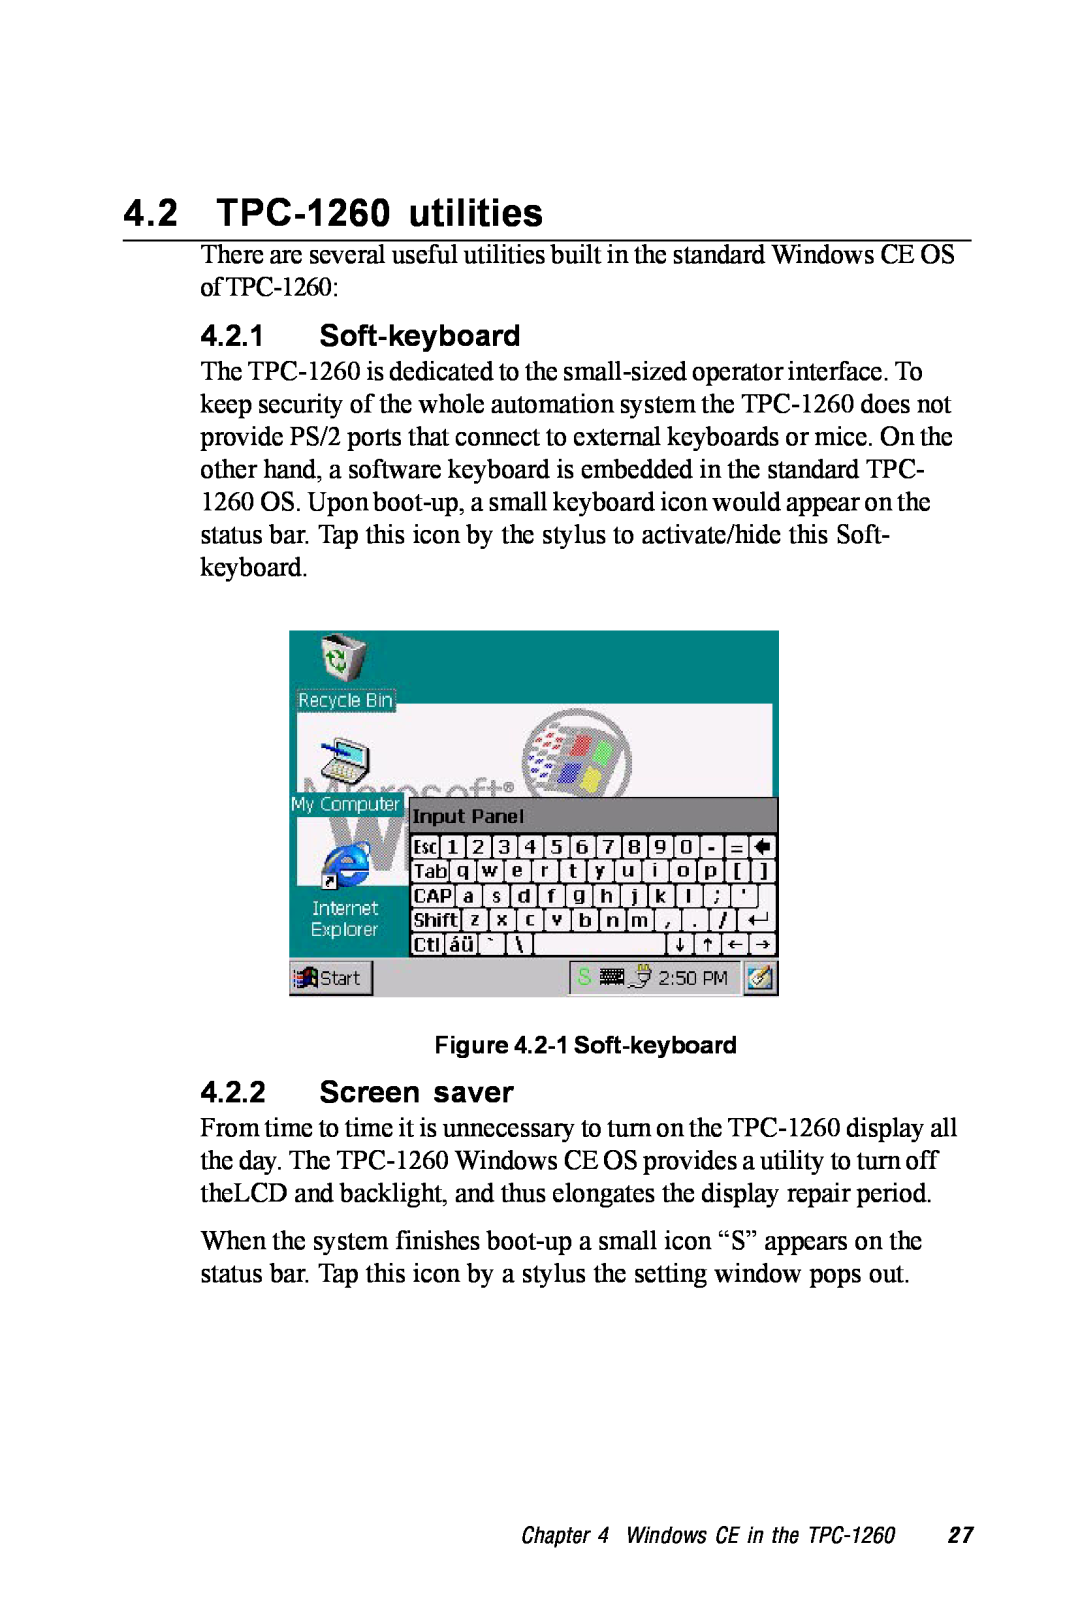 Advantech manual TPC-1260 utilities, Soft-keyboard, Screen saver 